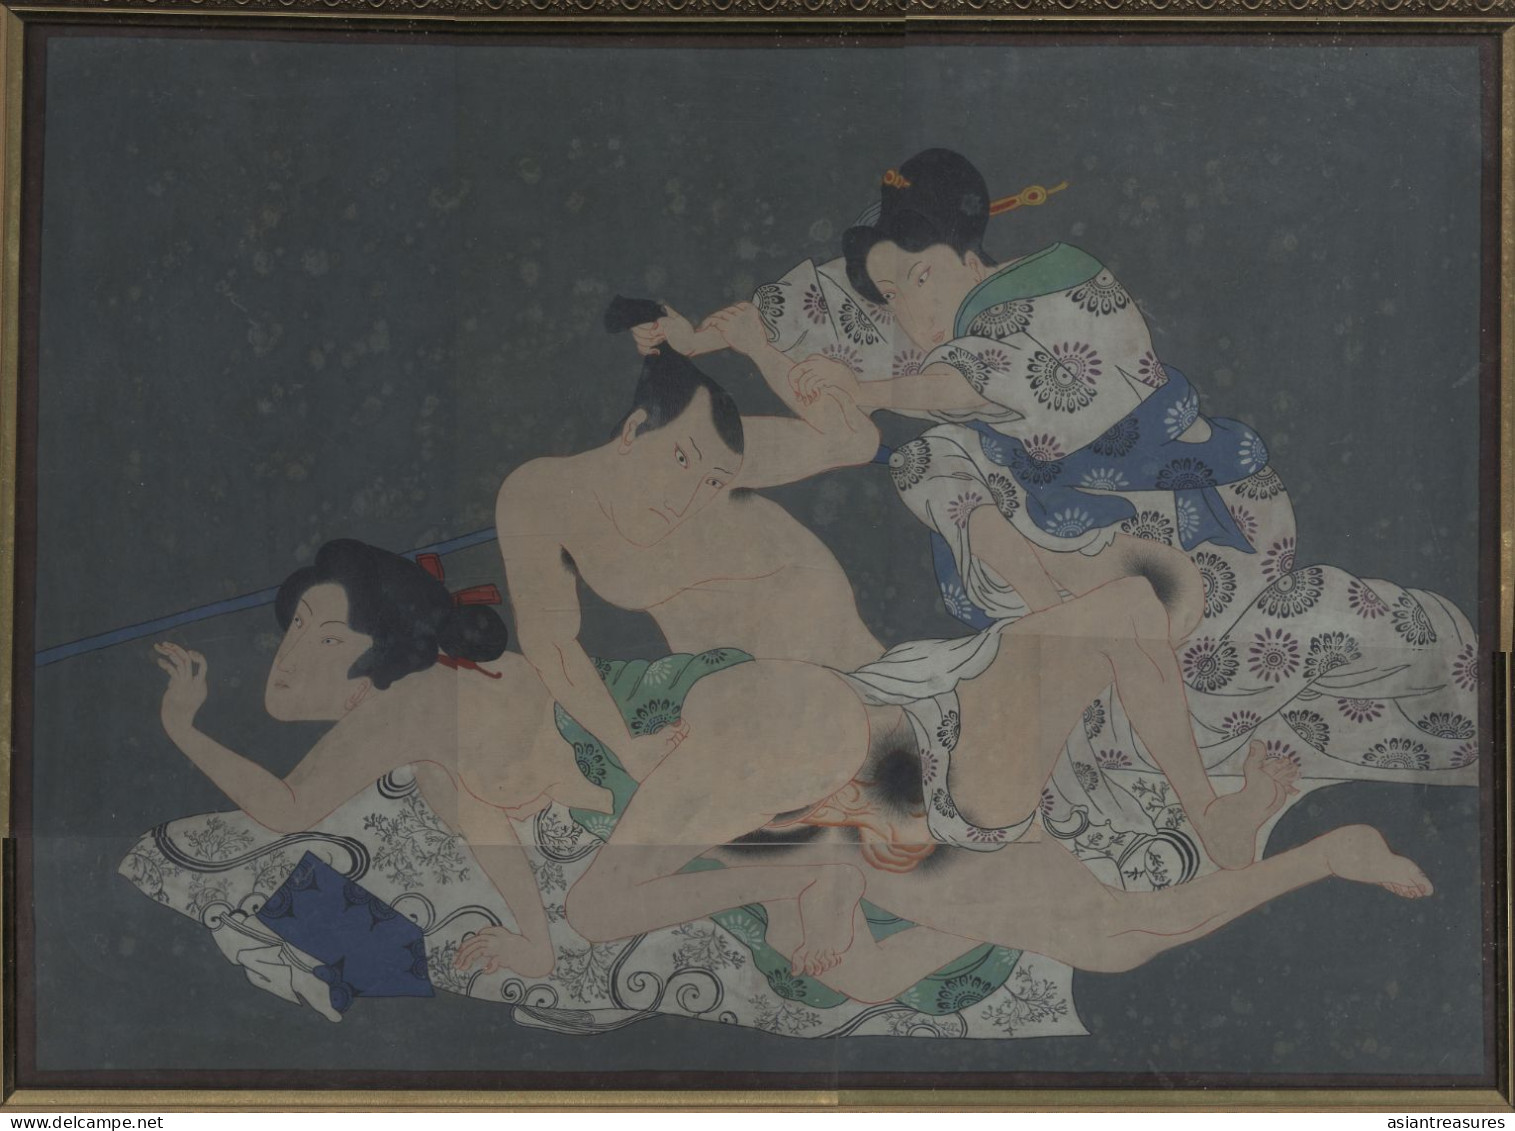 Japanese Shunga Explicit Erotic Art Picture 80 Years+ Old - Arte Asiatica